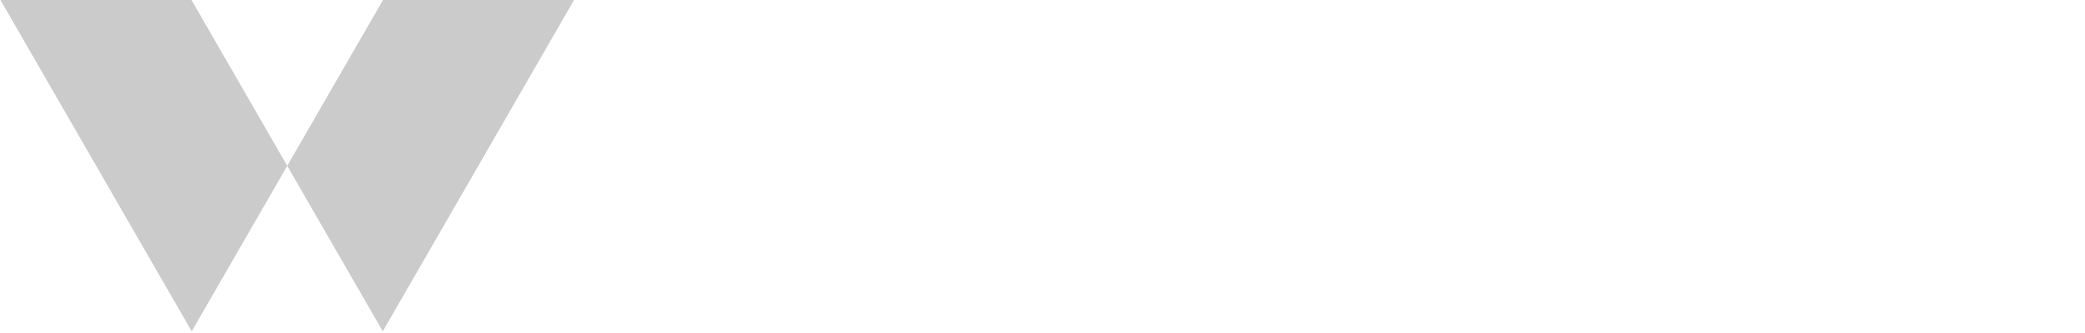 wooacademy logo marketing